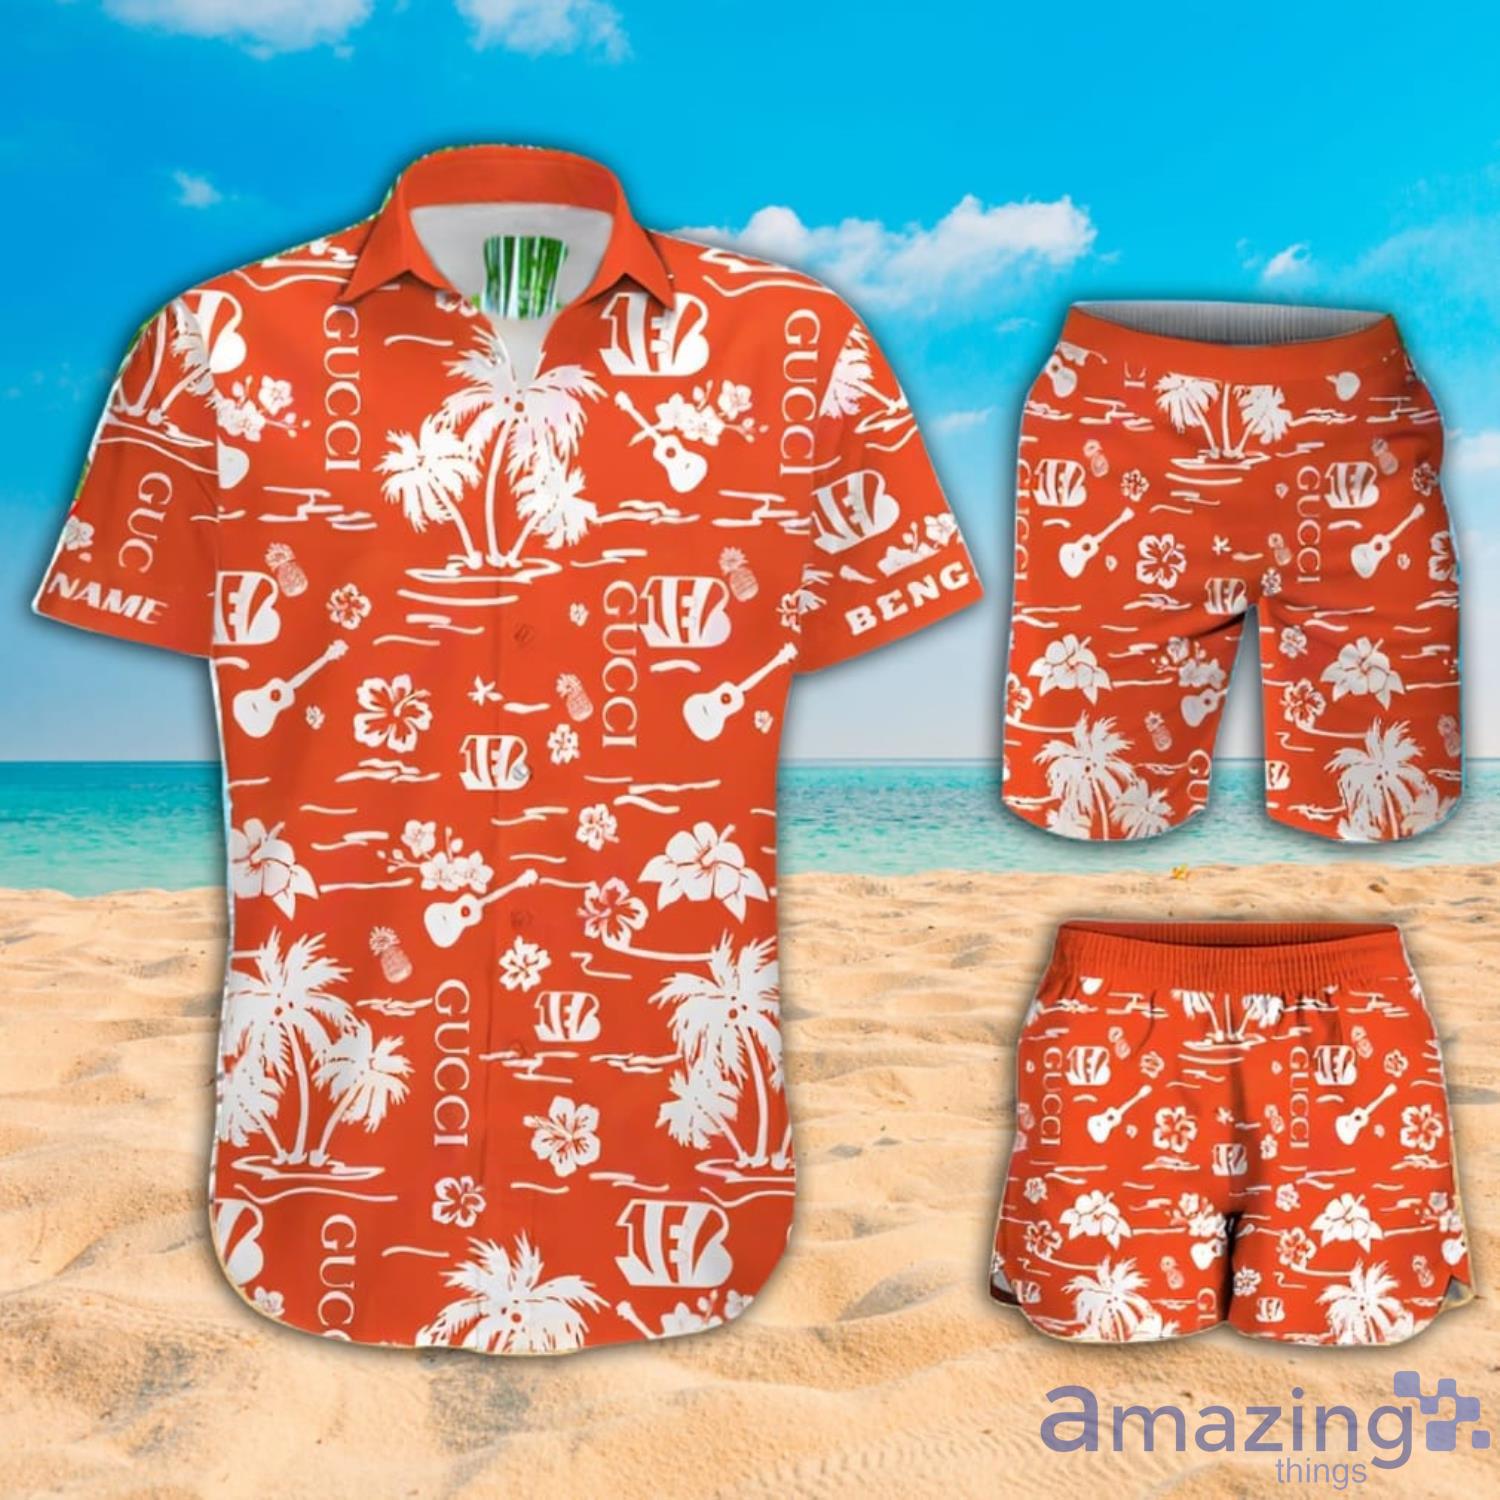 gucci hawaiian shirt